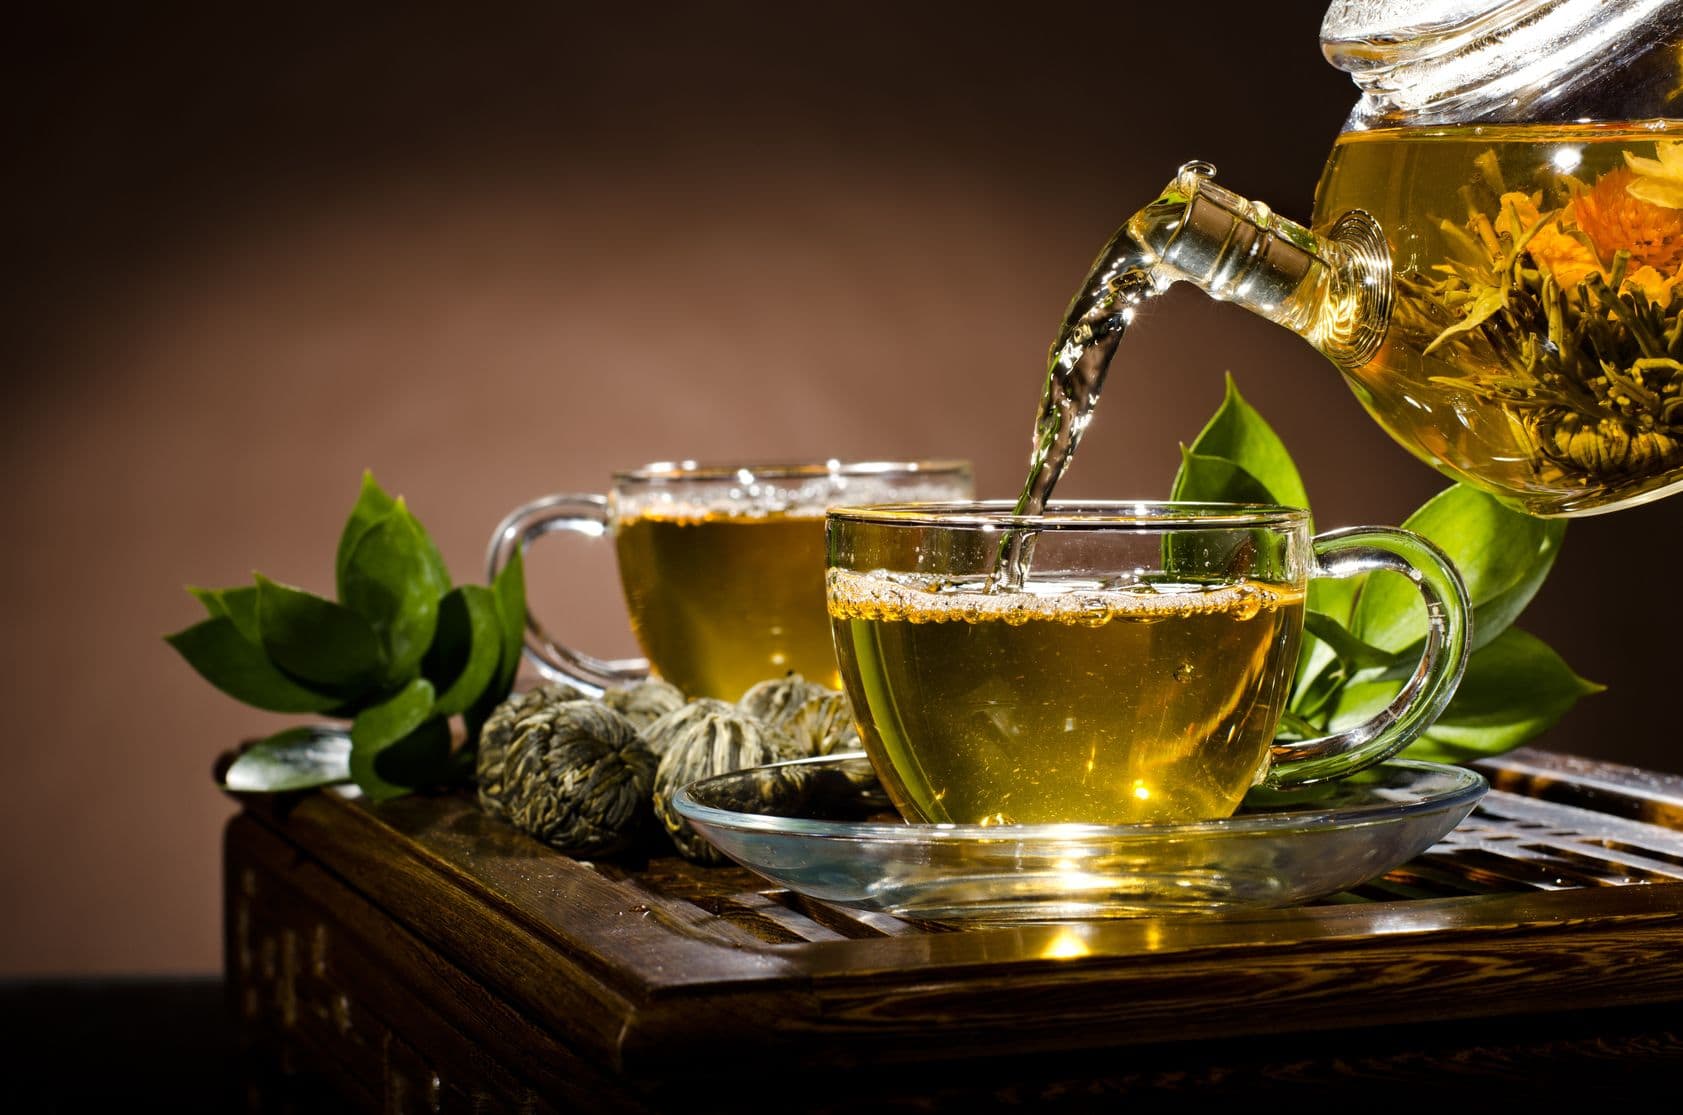 green tea prevents heart disease and increases longevity